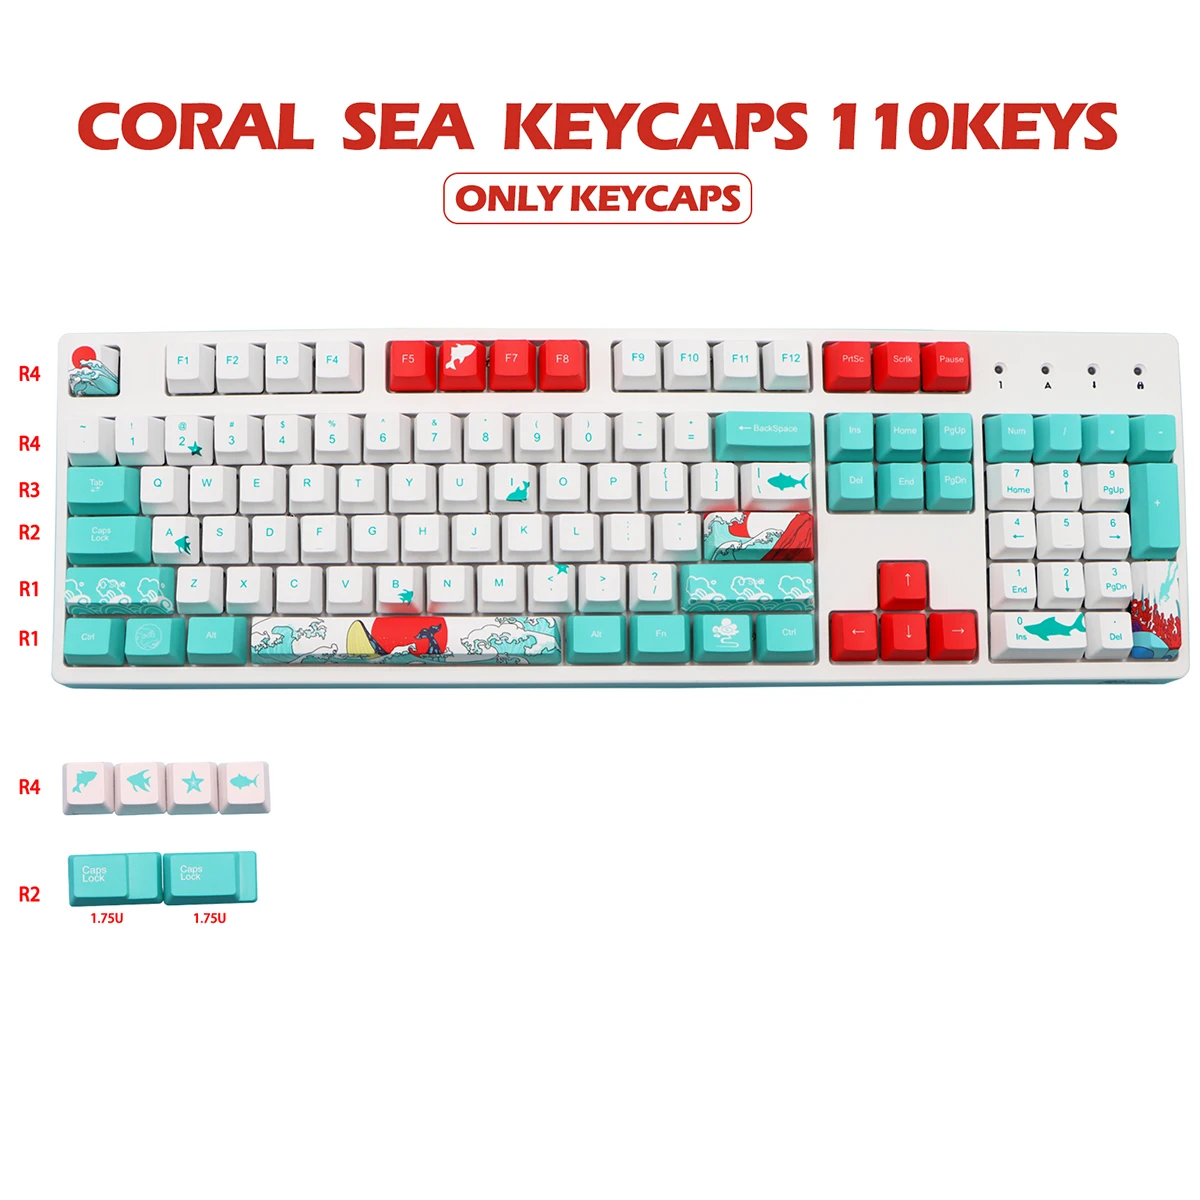 110-chaves-pbt-keycaps-oem-perfil-coral-mar-keycap-dz60-poker-gk61-gk64-tintura-sublimacao-keycap-para-teclado-do-jogo